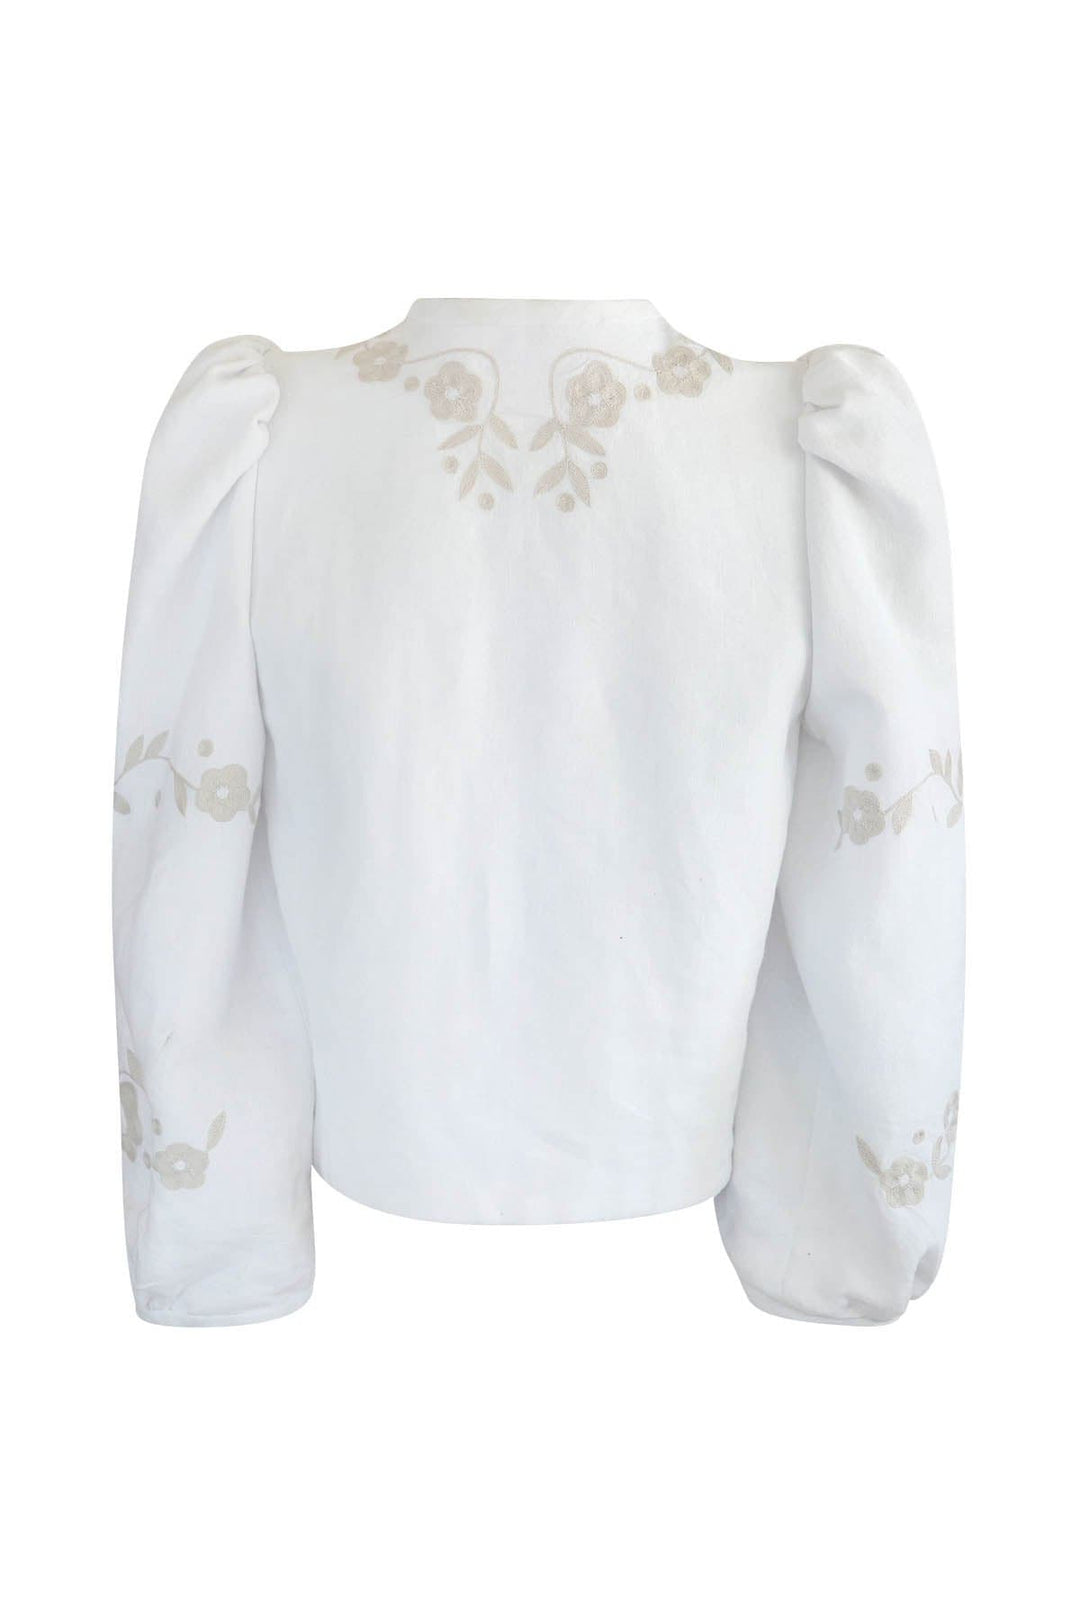 Erika White and Cream Hand Embroidered Jacket